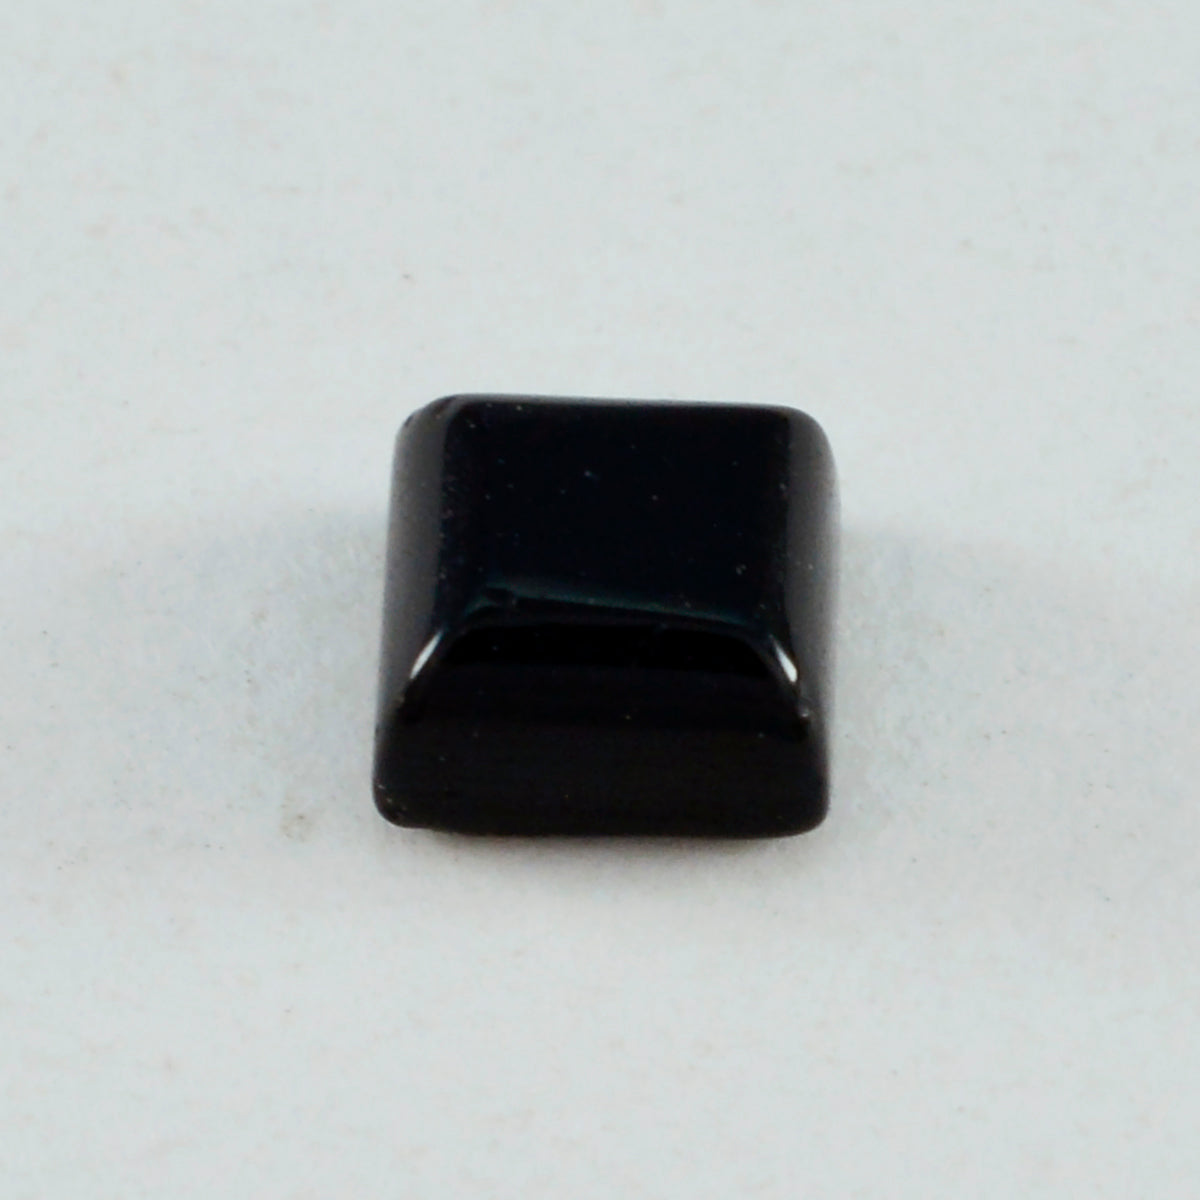 Riyogems 1PC Black Onyx Cabochon 11x11 mm Square Shape wonderful Quality Gem